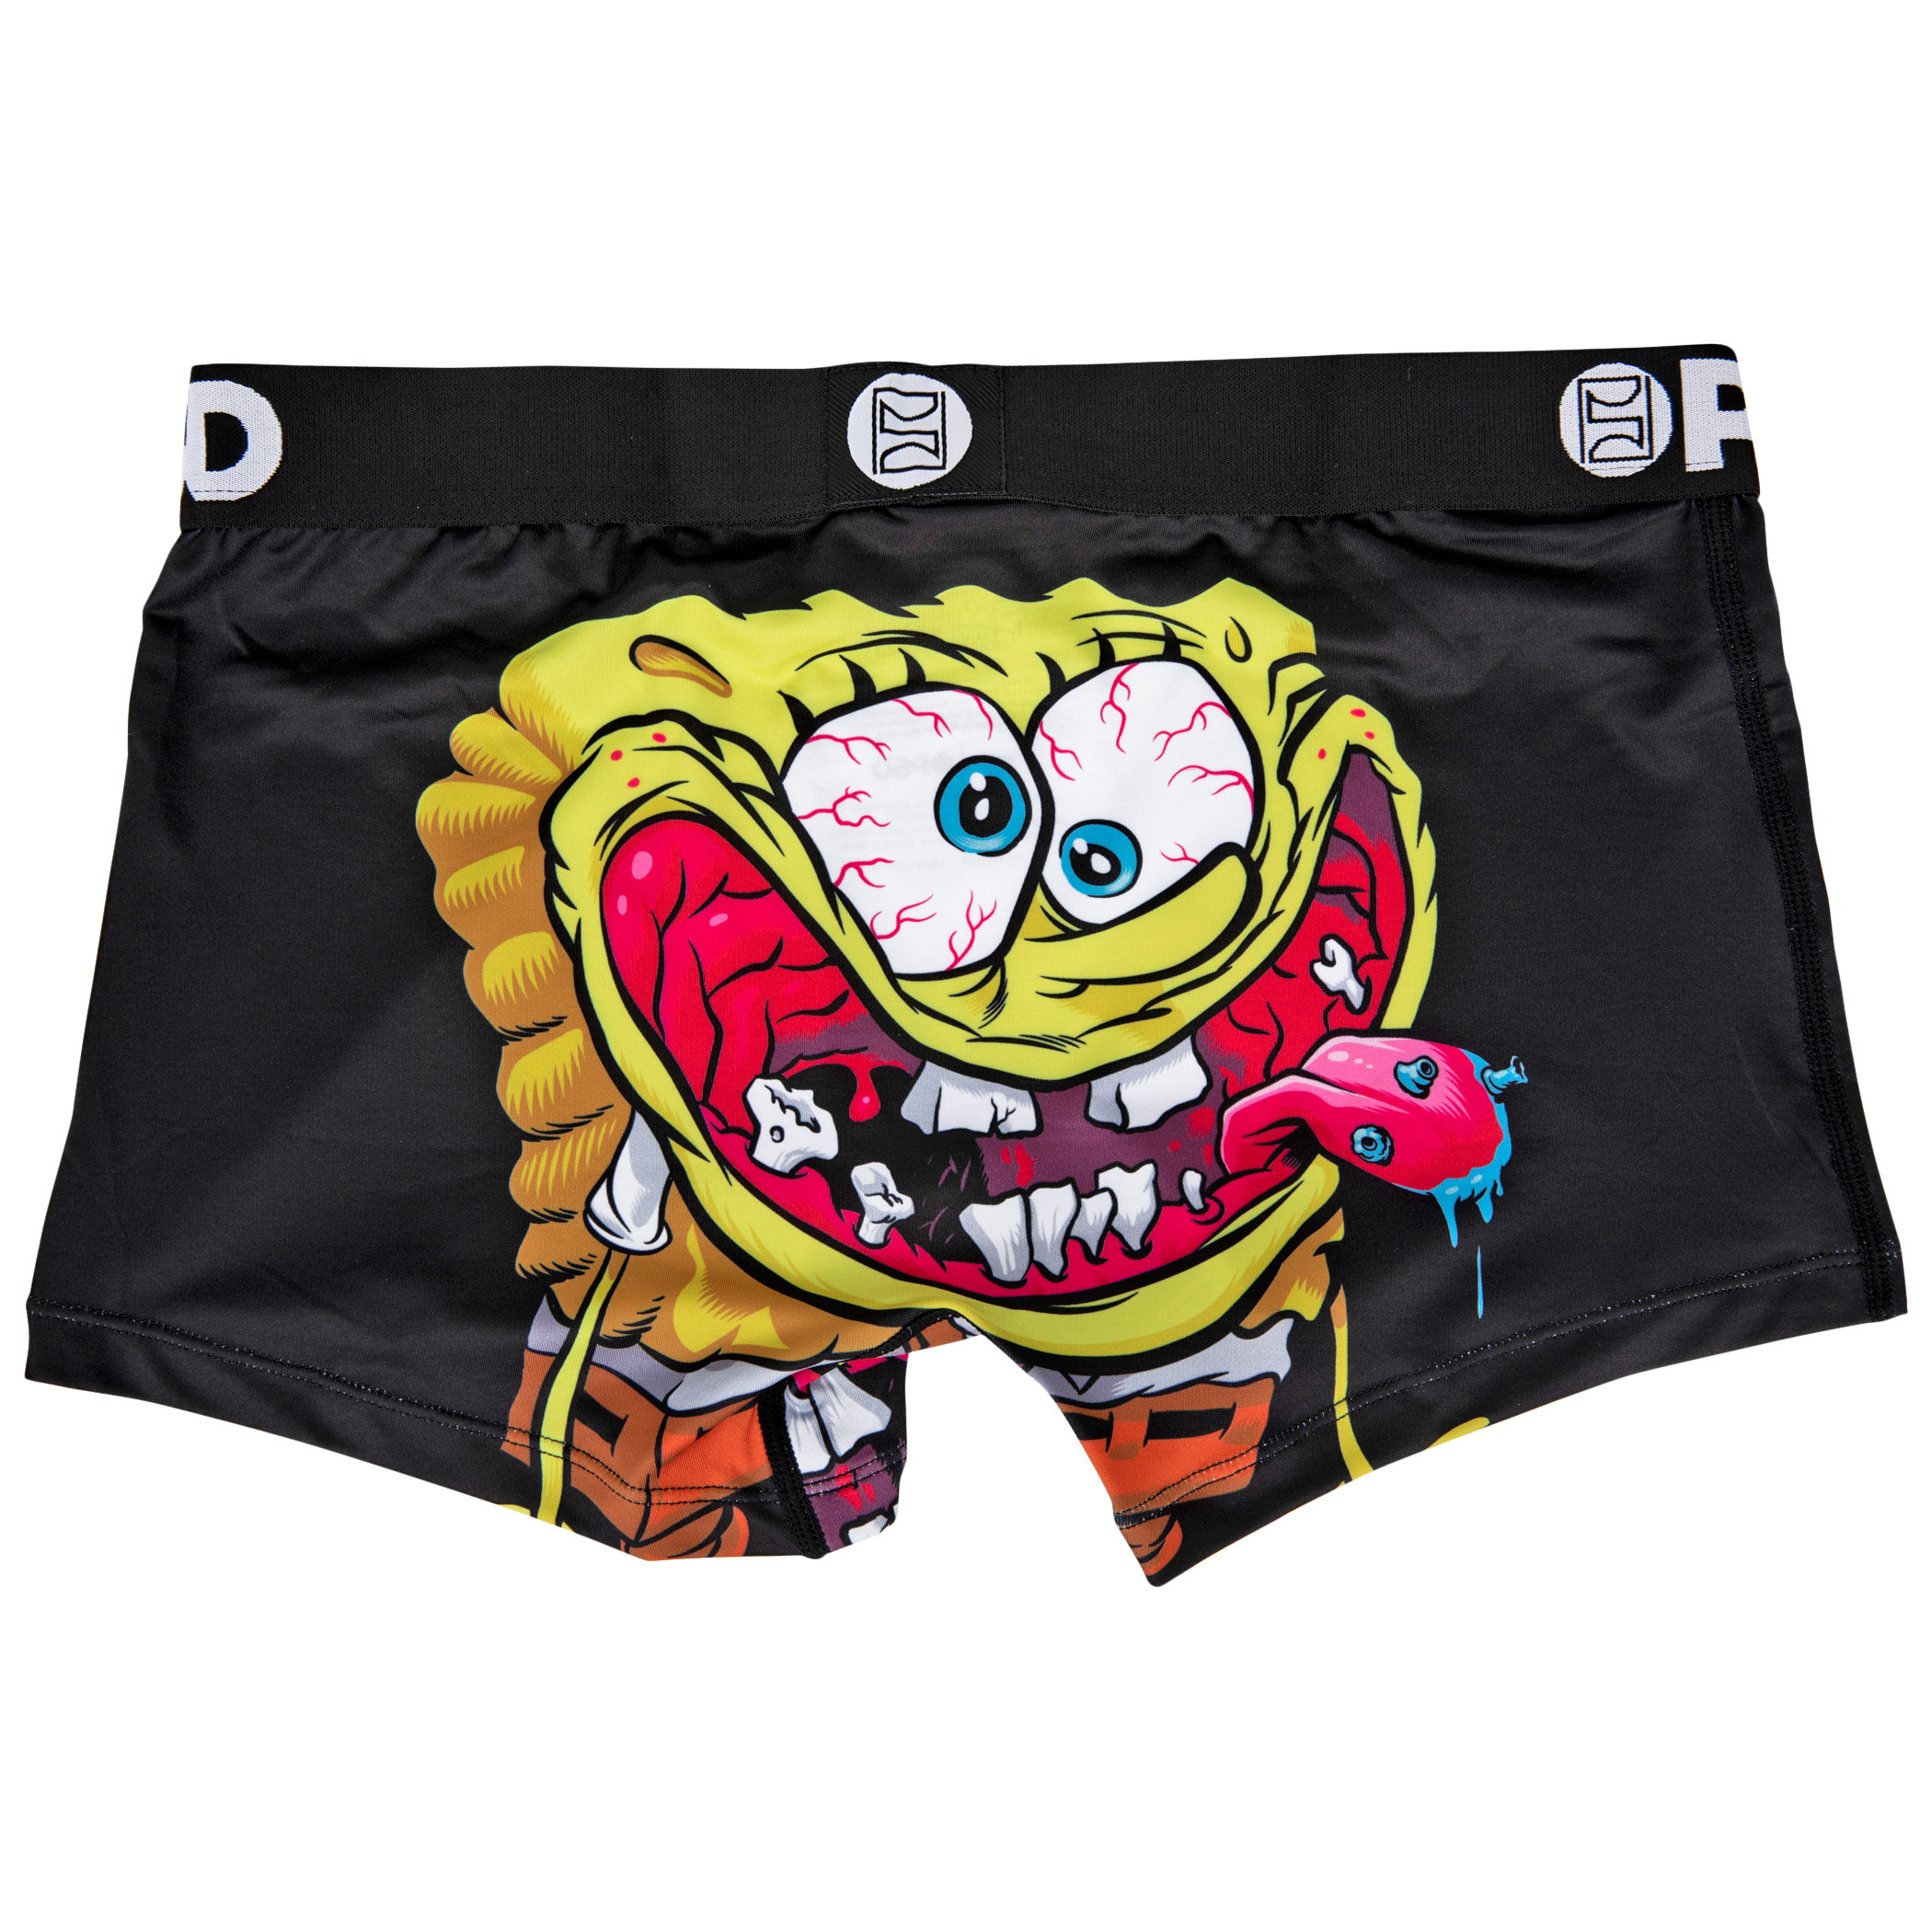 SpongeBob SquarePants Go Crazy Boy Shorts Underwear